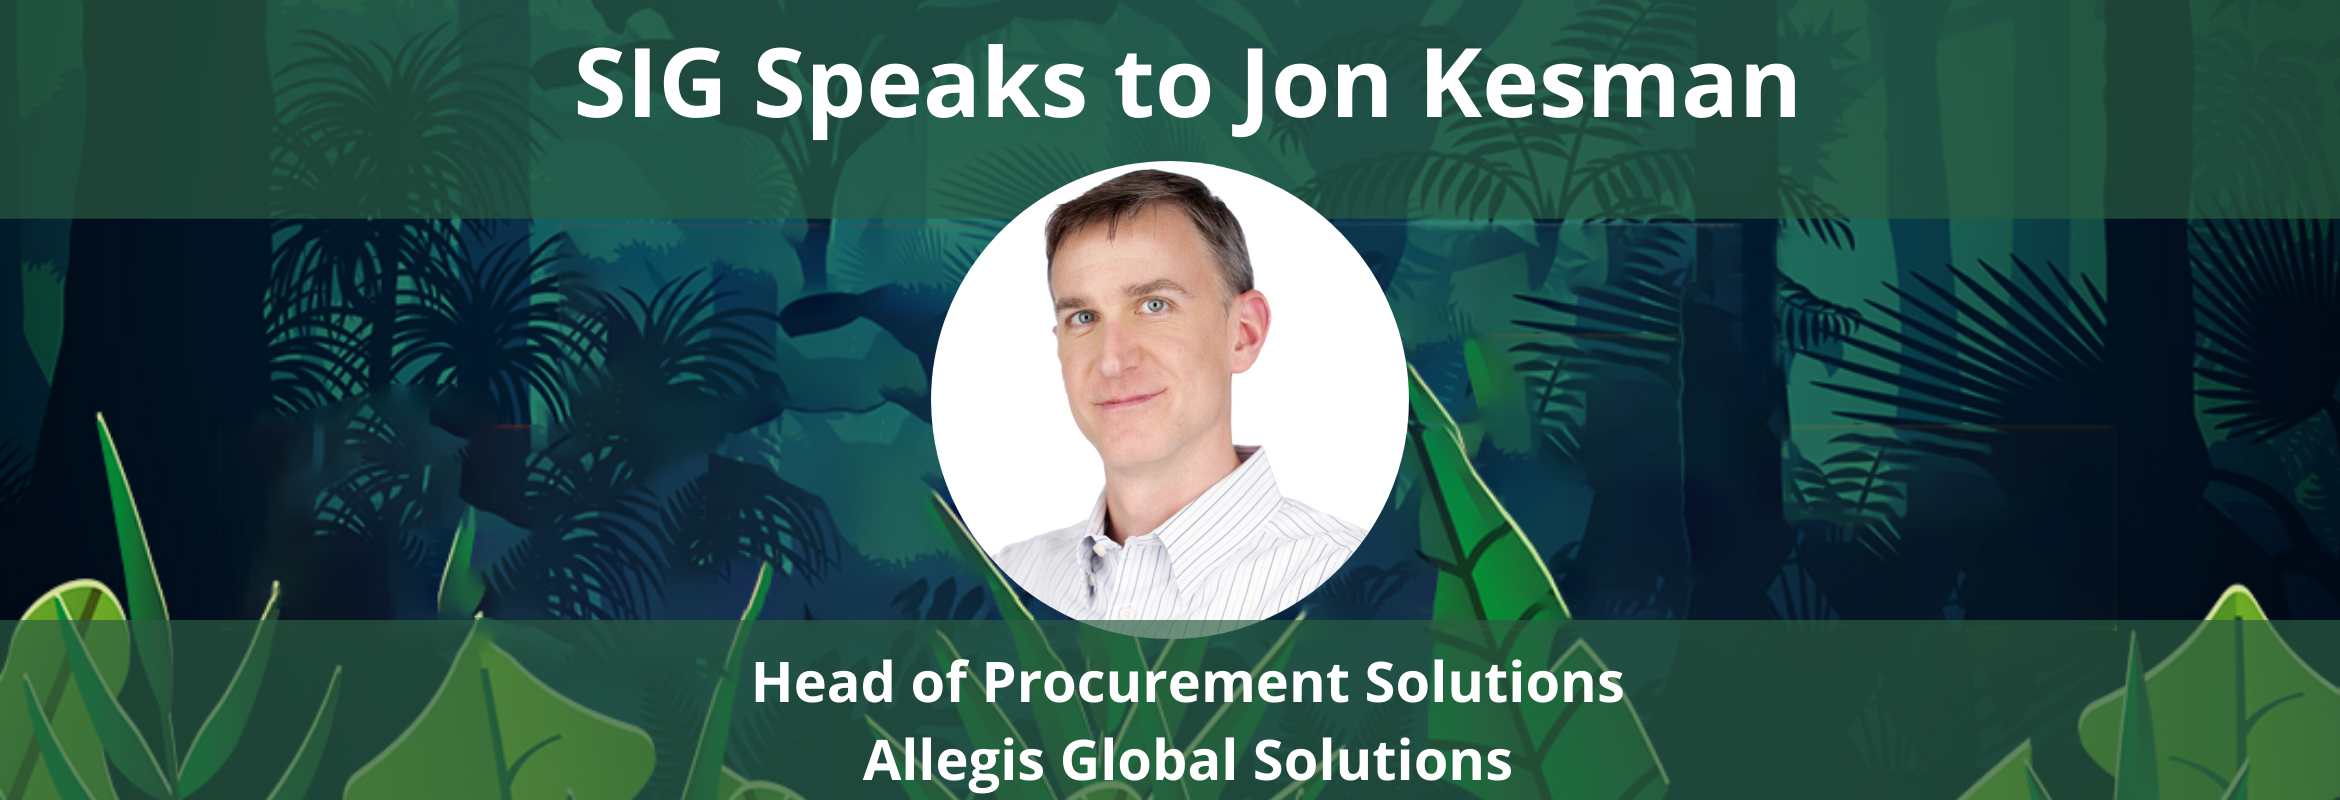 Jon Kesman presents at the SIG Procurement Technology Summit